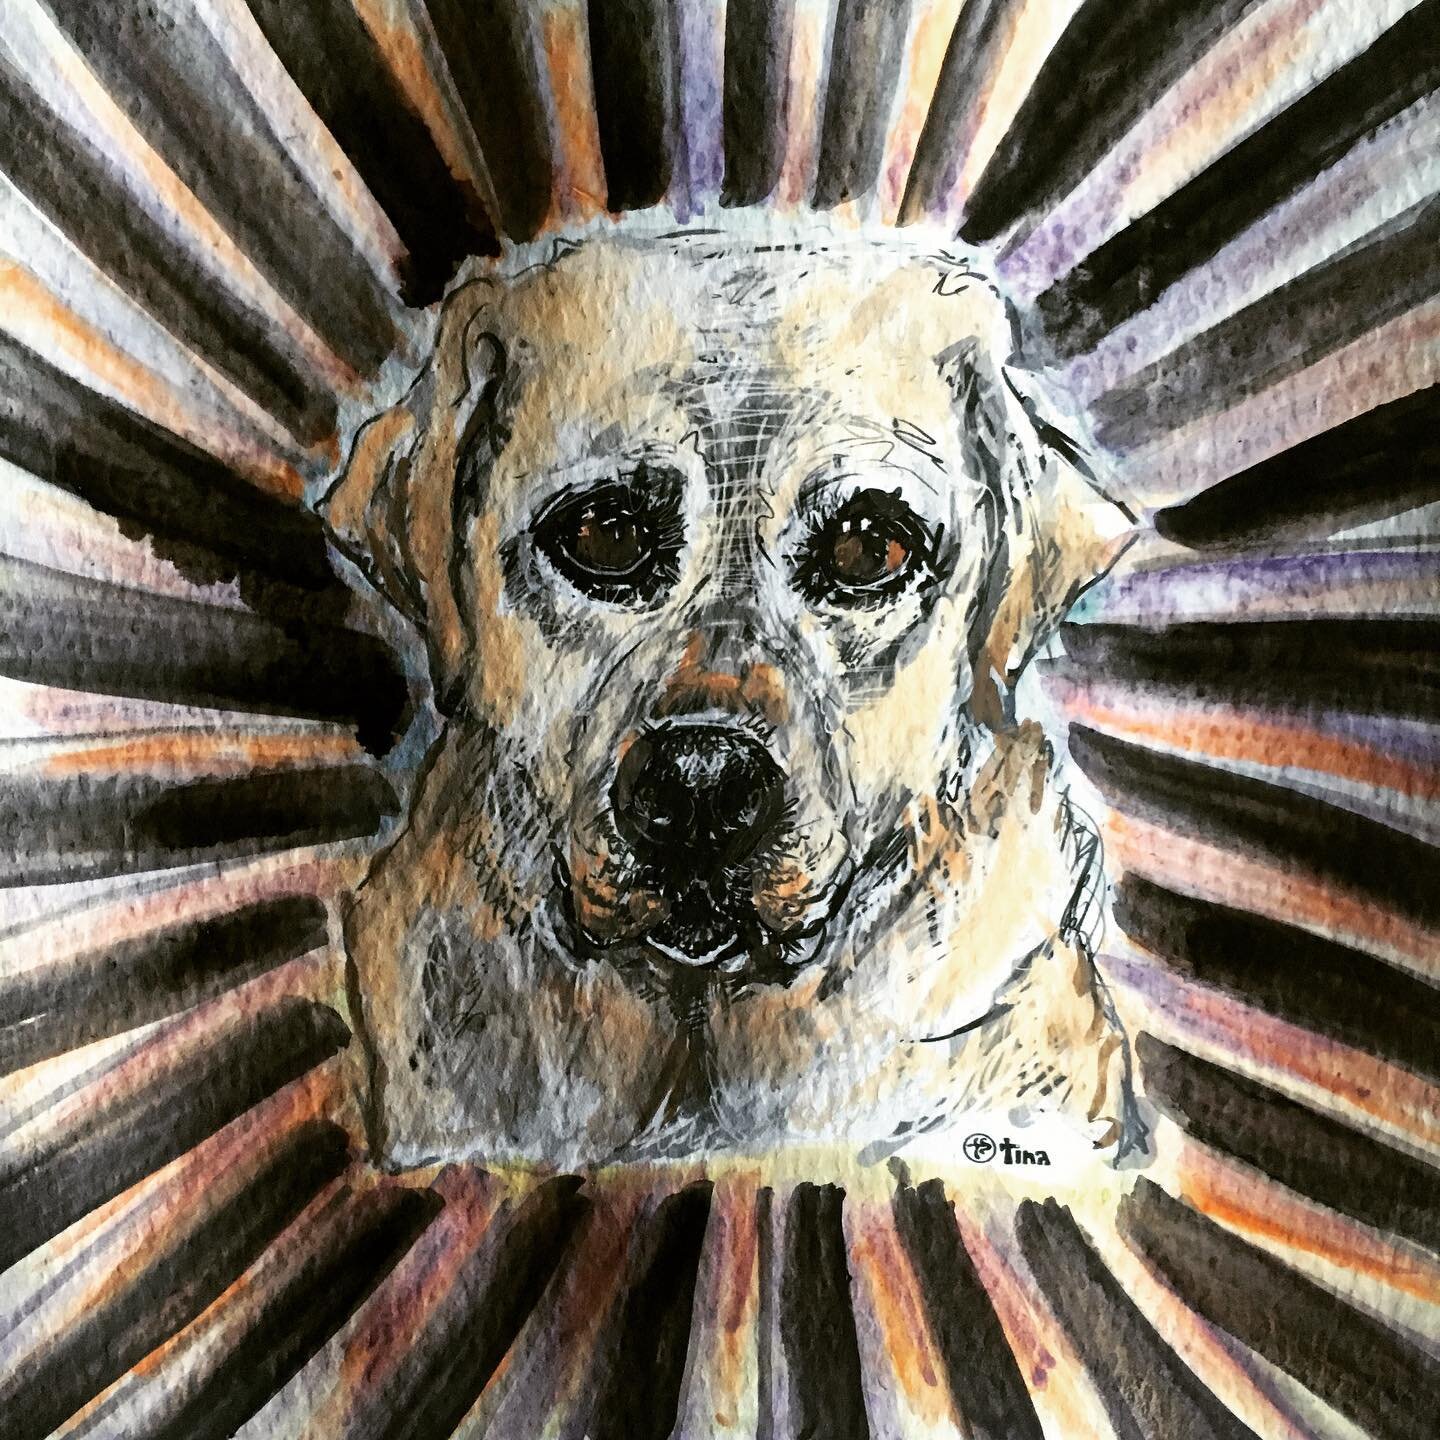 Shuli - amazing Labrador..
.
.
.
.
#Shuli #guidedogsofamerica #oneinamillion #drawing #watercolor #behappy